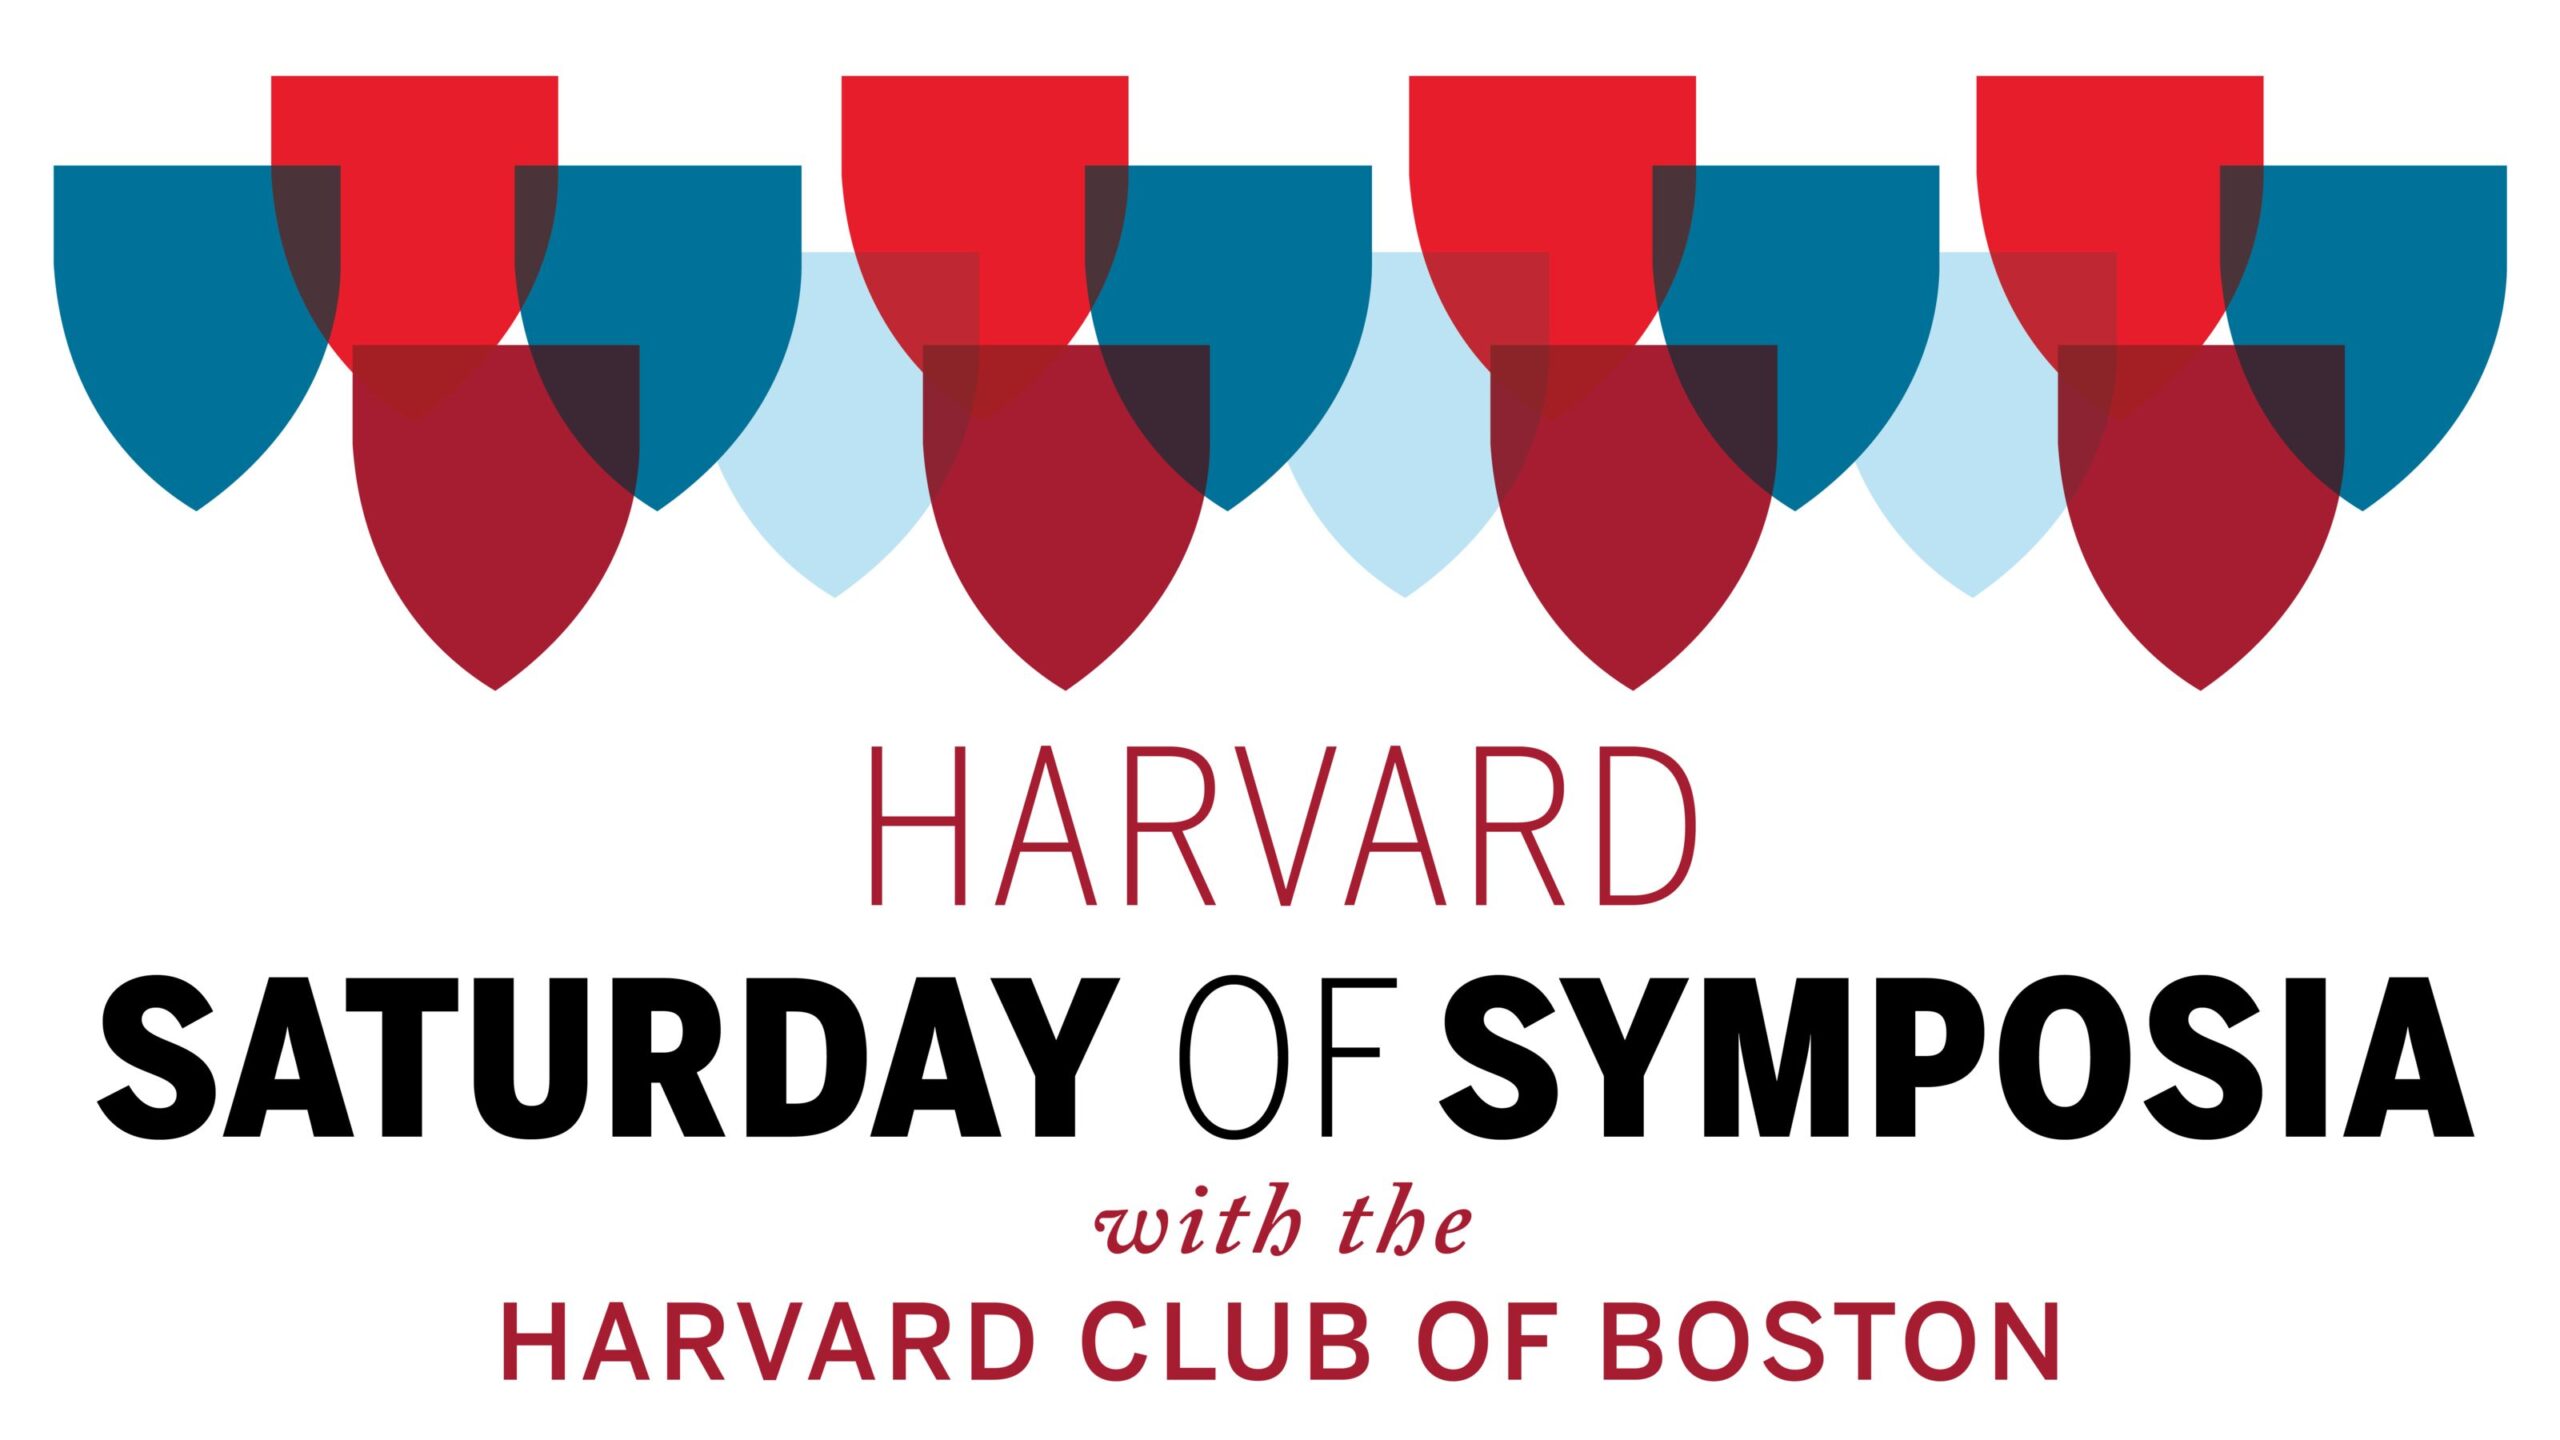 Harvard Saturday of Symposia